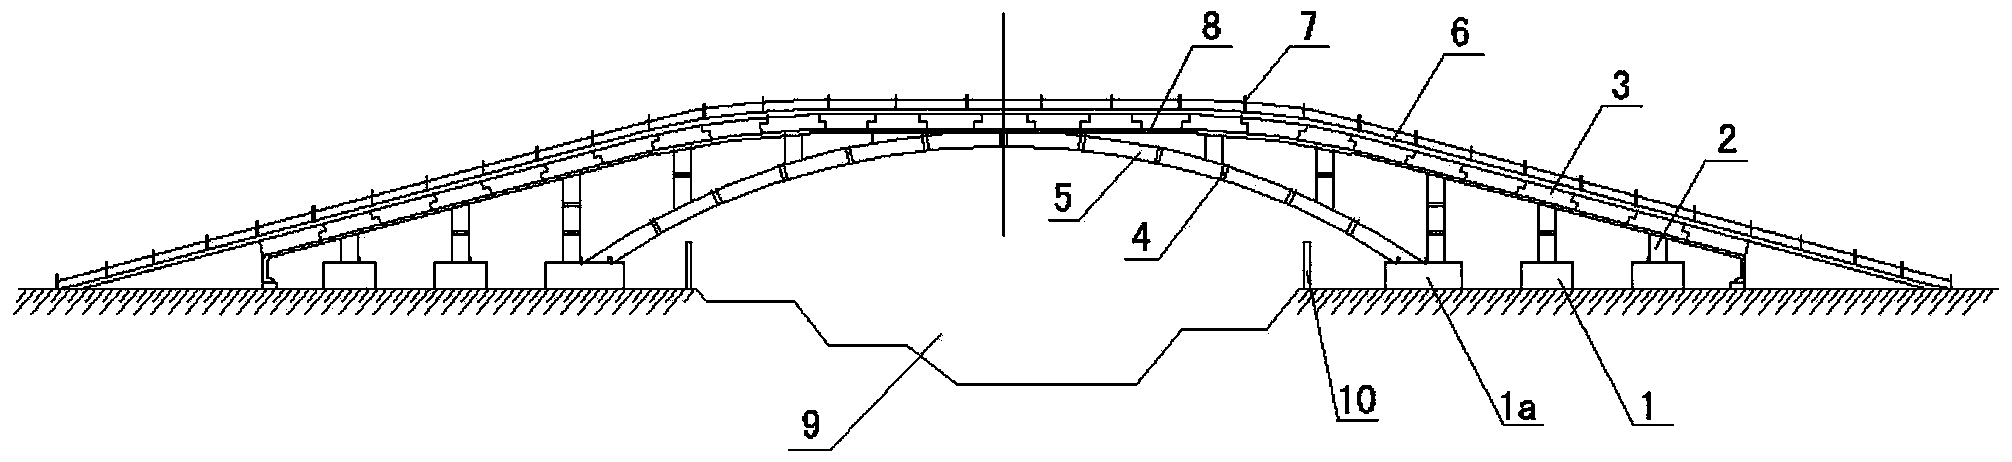 Traffic structure spanning urban rail transit construction area